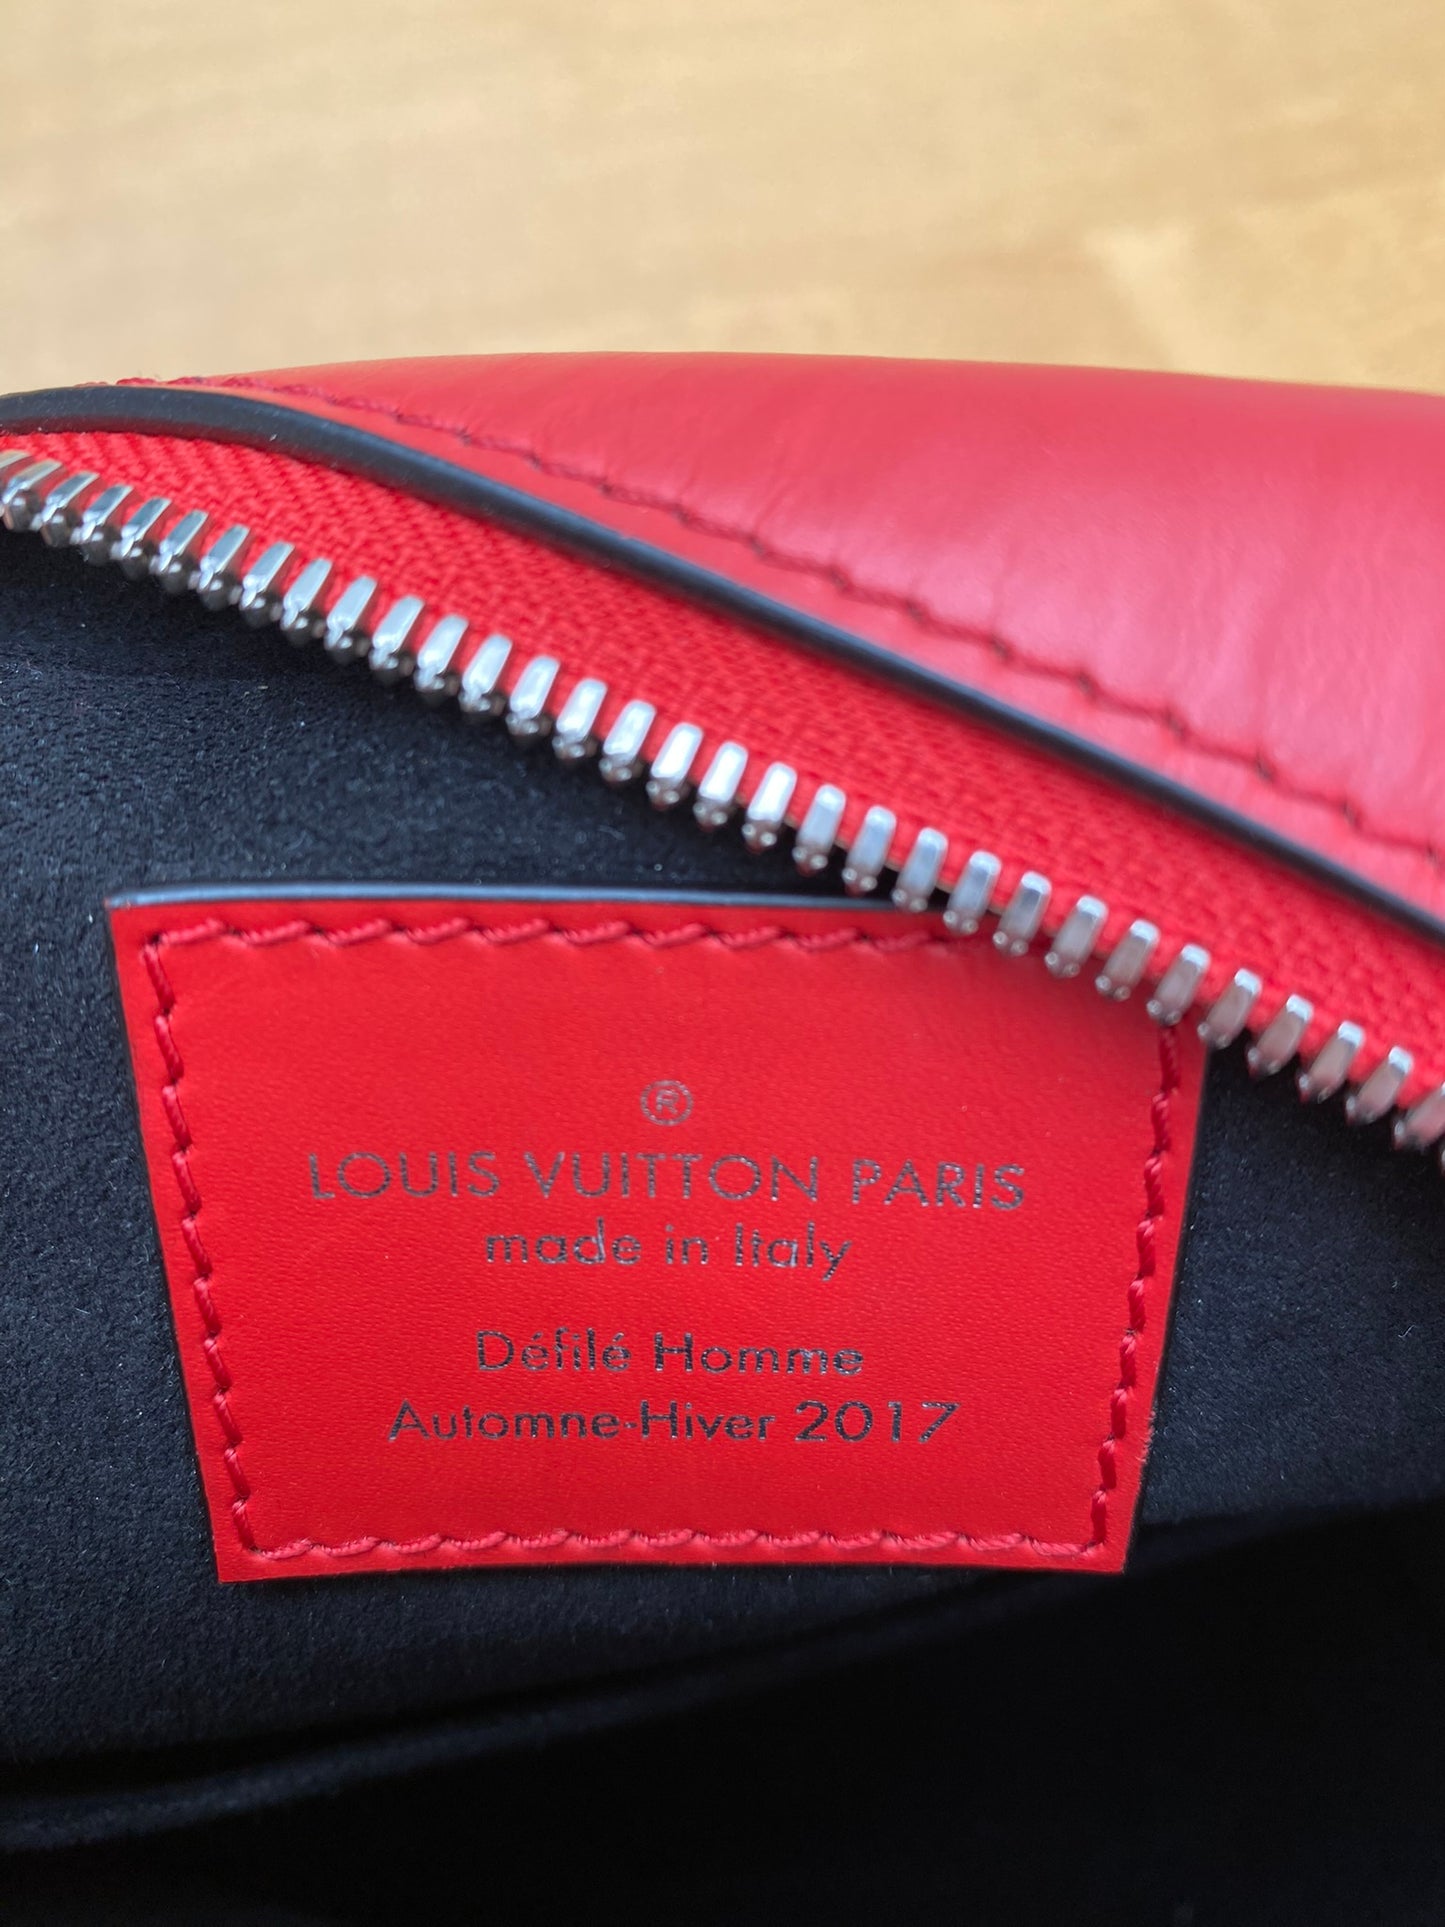 Louis Vuitton x Supreme Danube leather bag